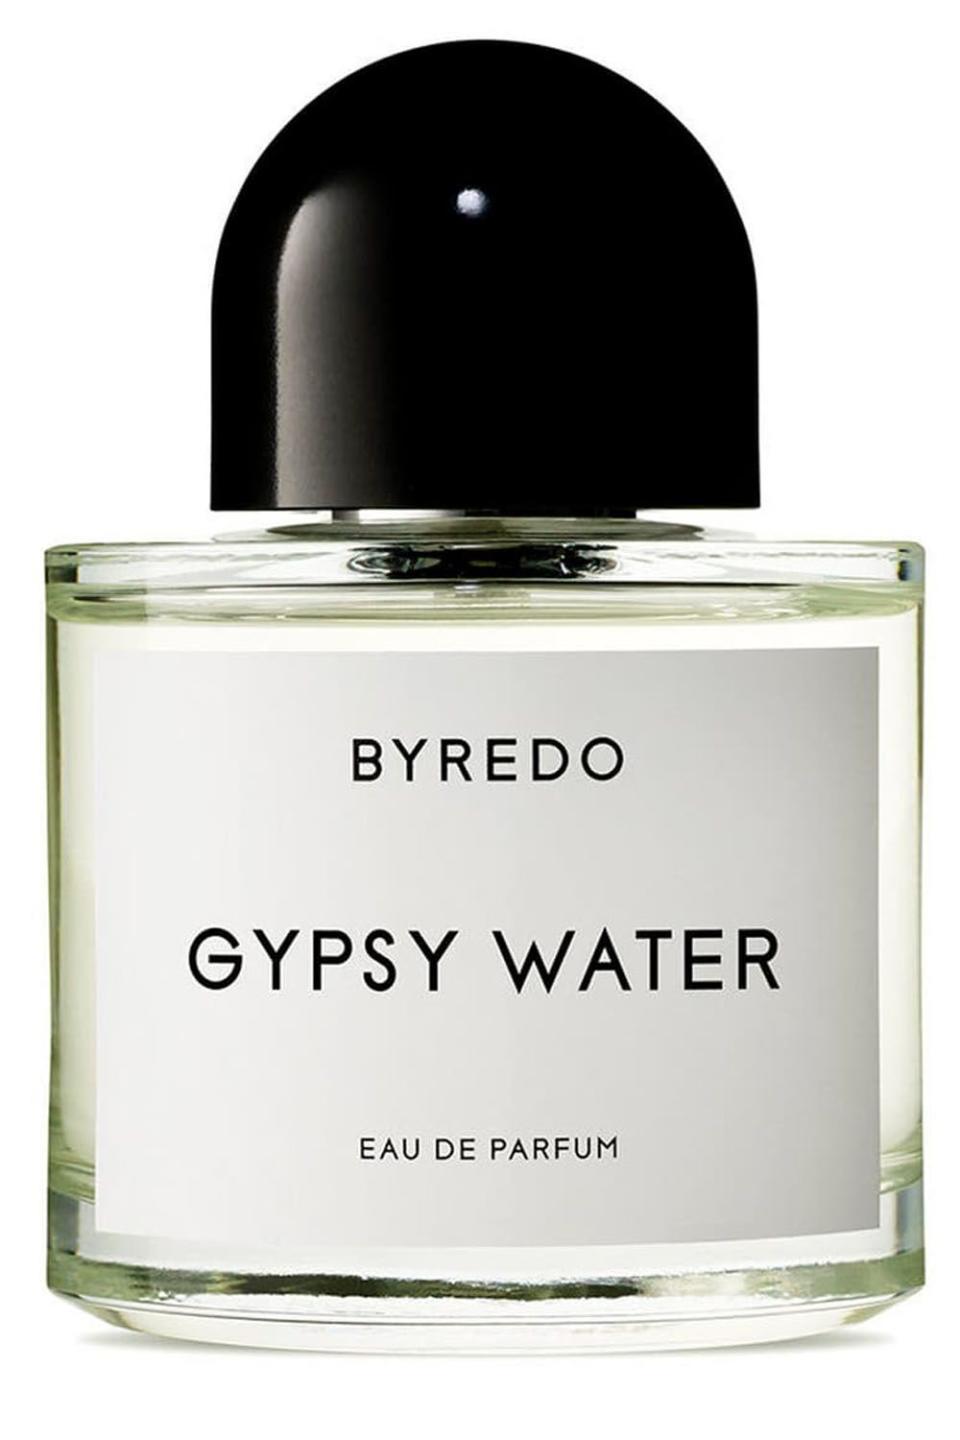 14) Byredo Gypsy Water Eau De Parfum